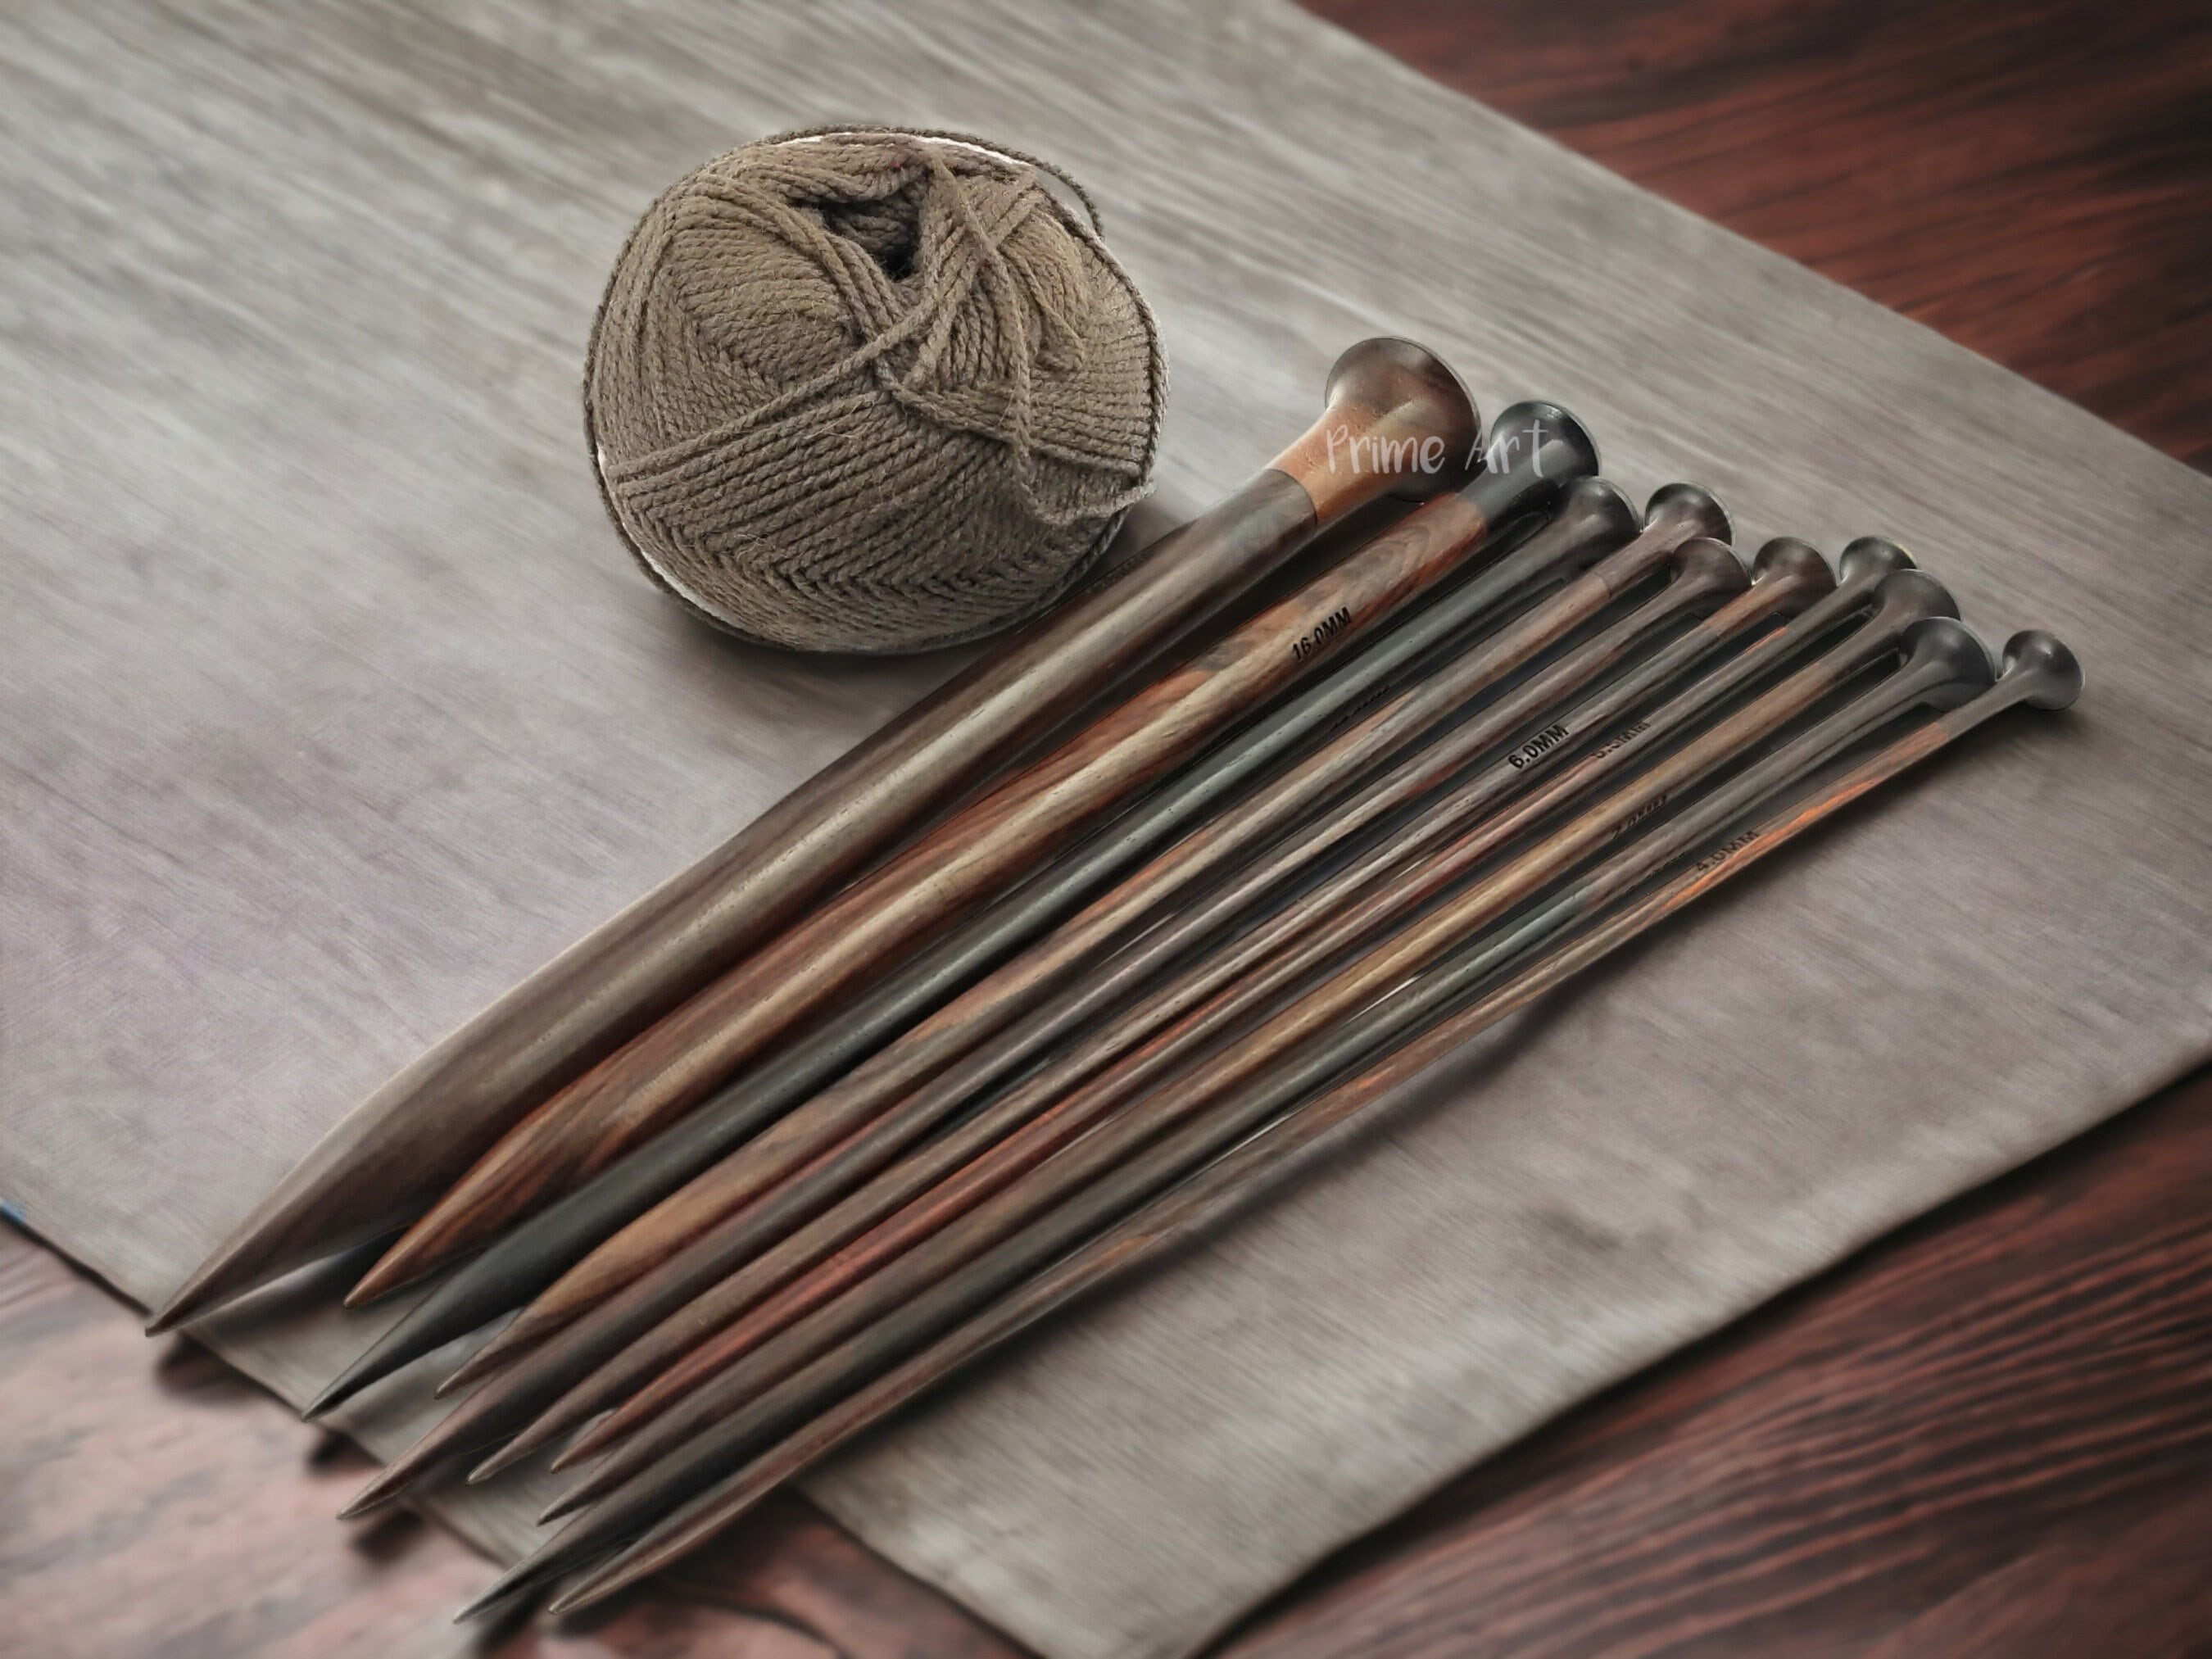 15.7 40cm Bamboo Circular Knitting Needles Sizes US 0 2.0mm 1 2.25mm 2  3.75mm 3 3.25mm 4 3.5mm 5 3.75mm 6 4.0mm 7 4.5mm 40 Cm 